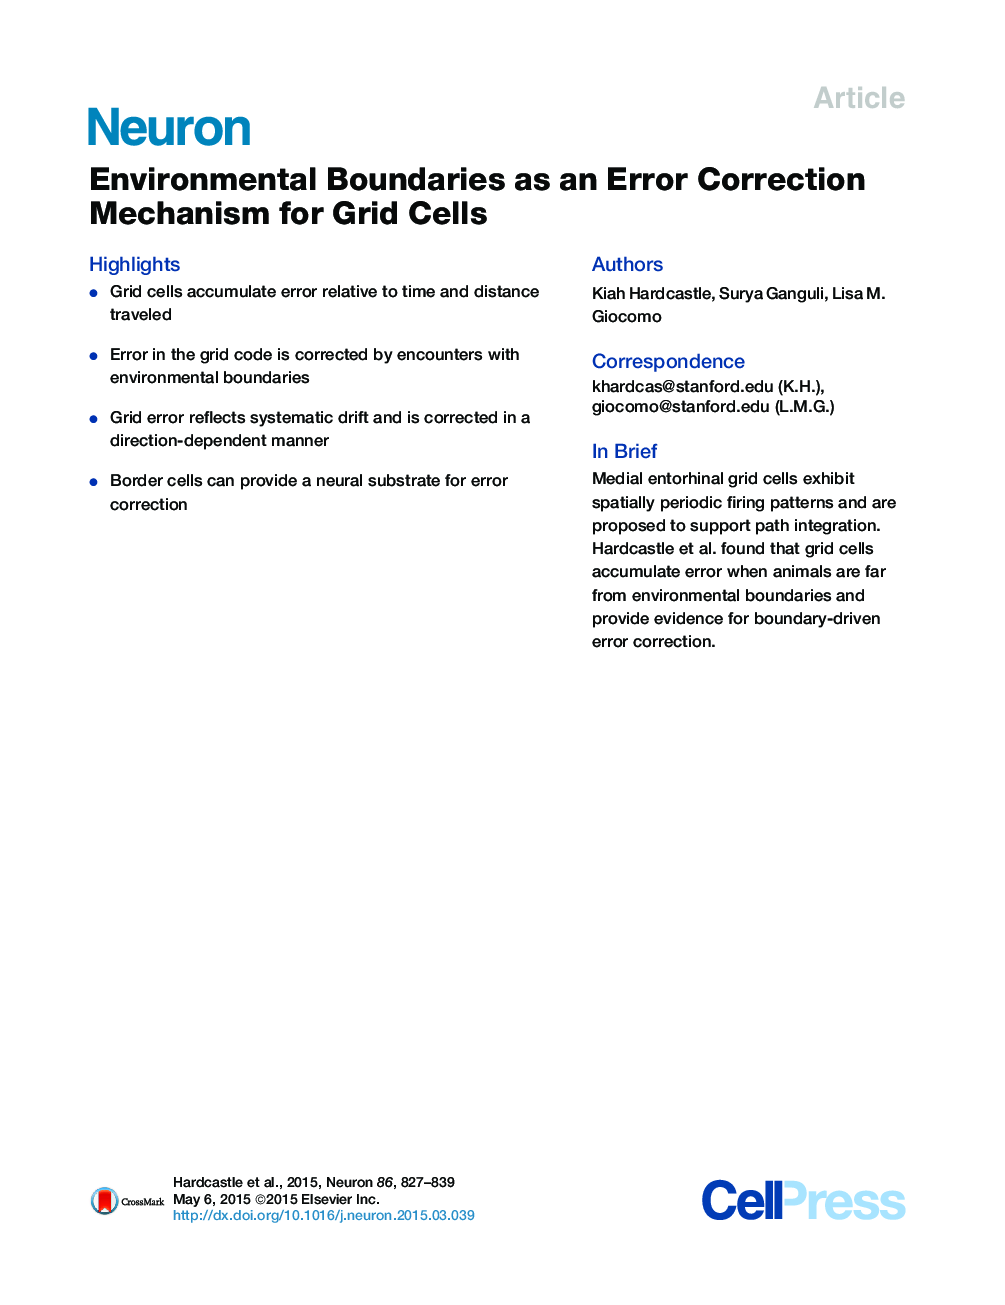 Environmental Boundaries as an Error Correction Mechanism for Grid Cells